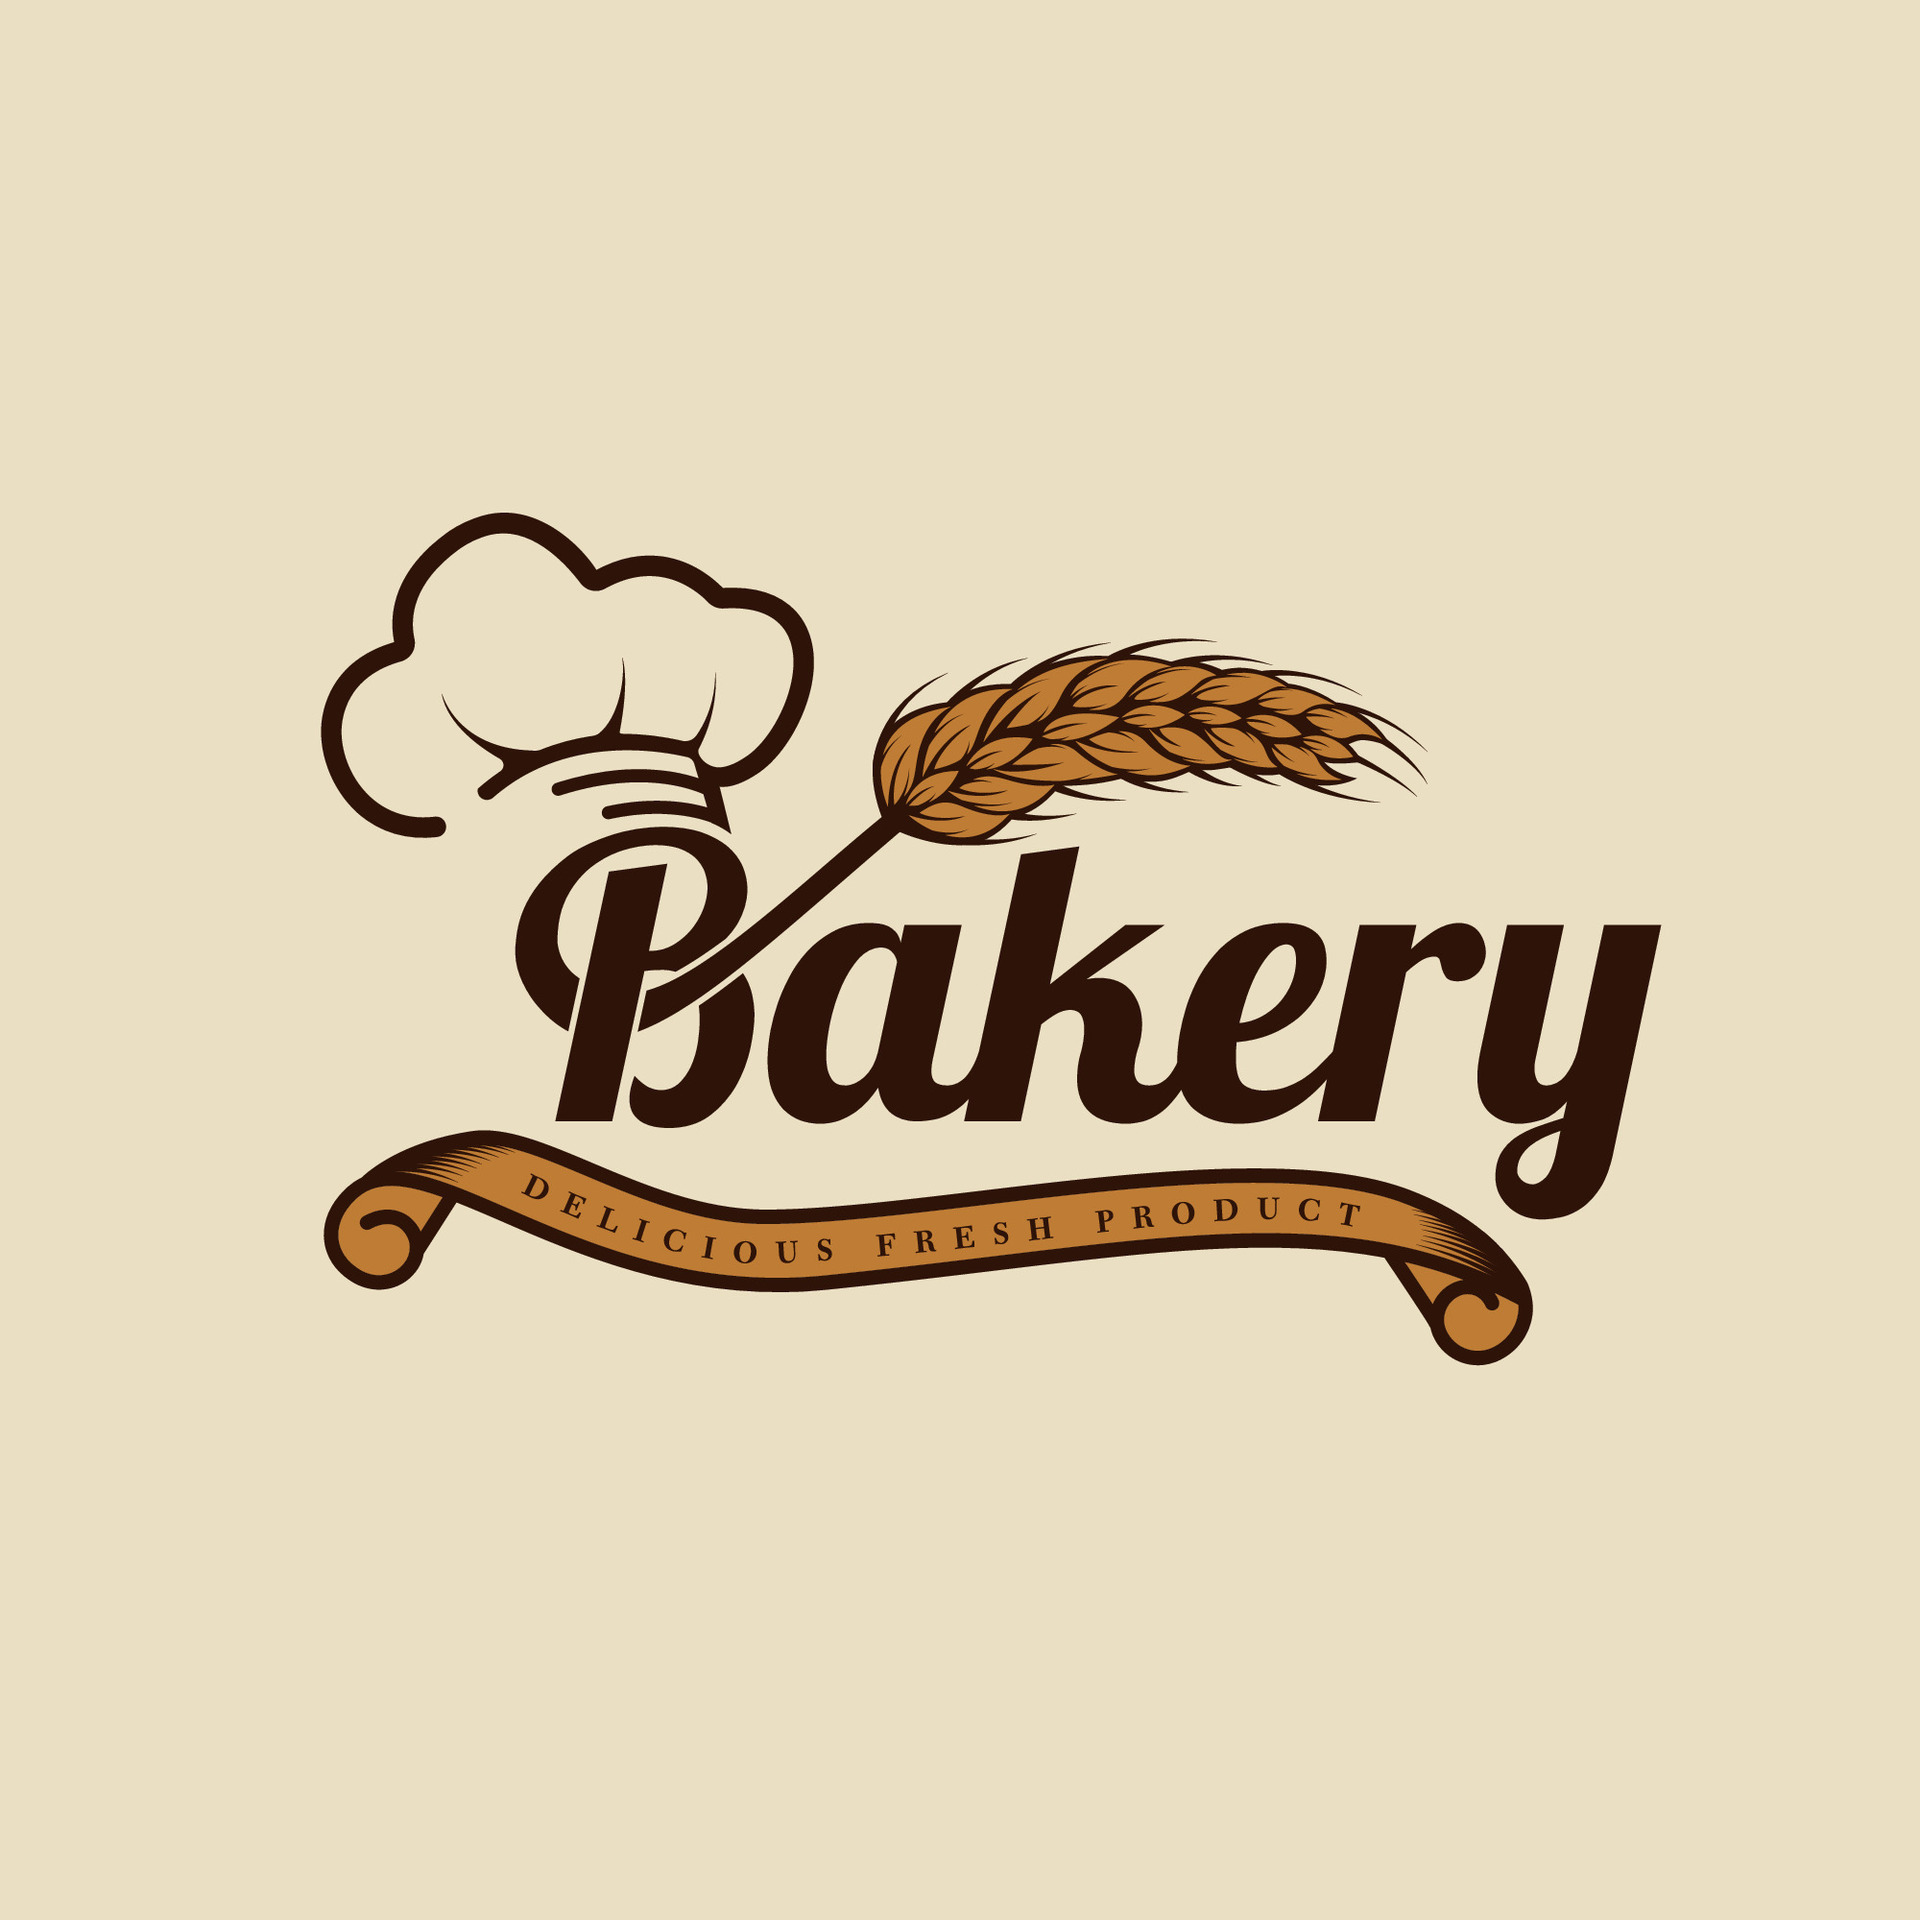 Bakery logo retro concept design illustration , best for bread and ...